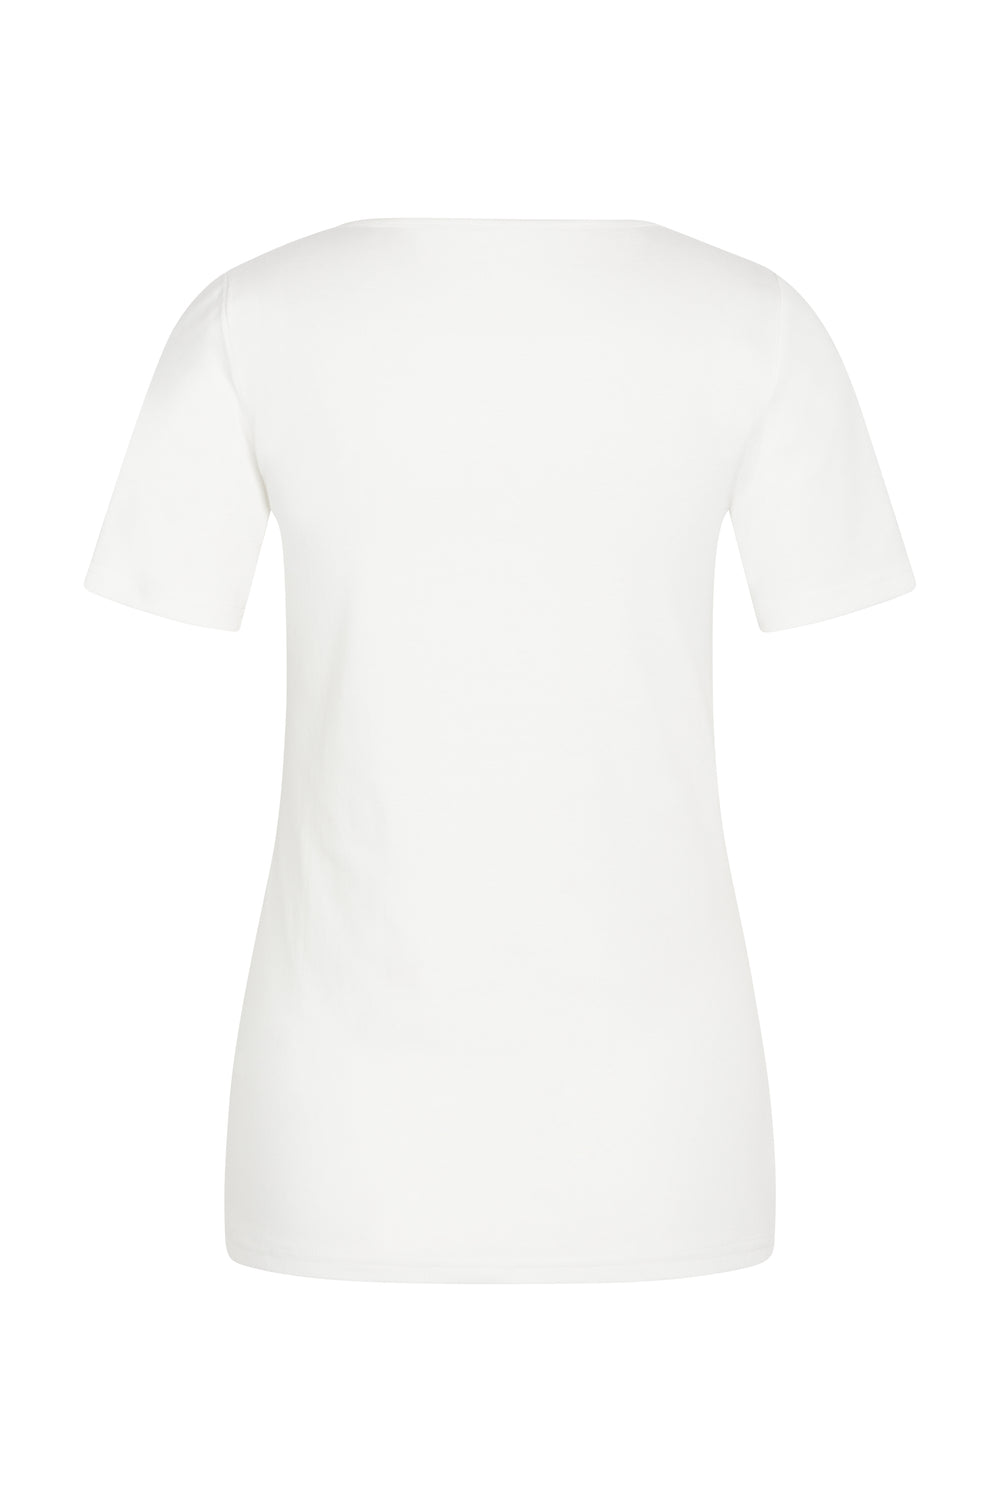 Rue de Femme New Svea t-shirt T-SHIRTS 133 White sand